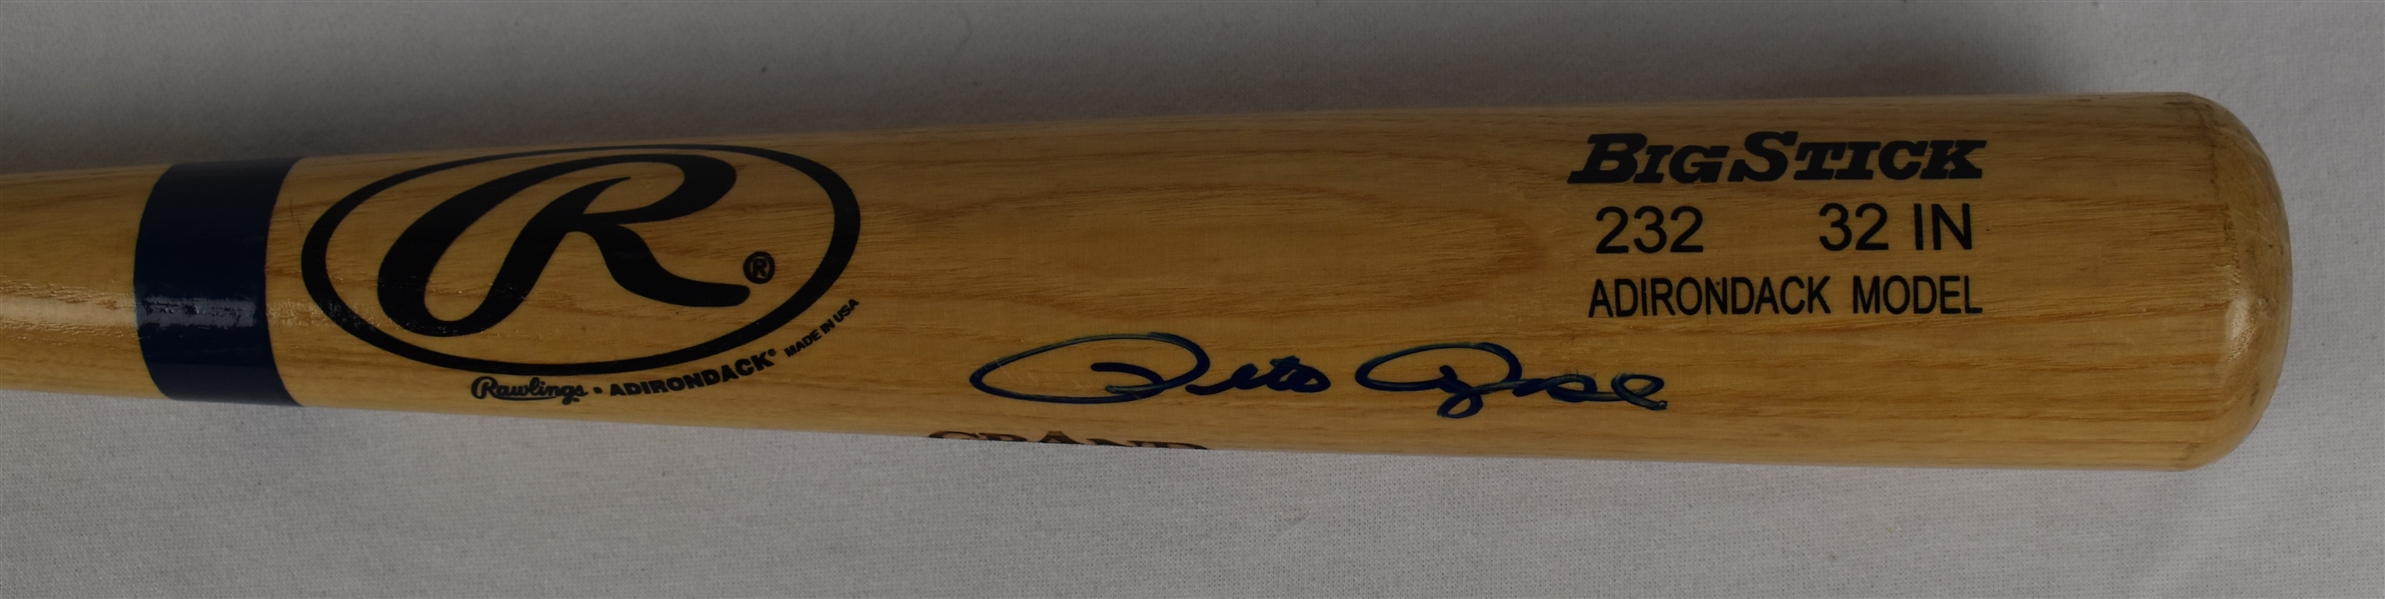 Pete Rose Autographed Commemorative Baseball Bat